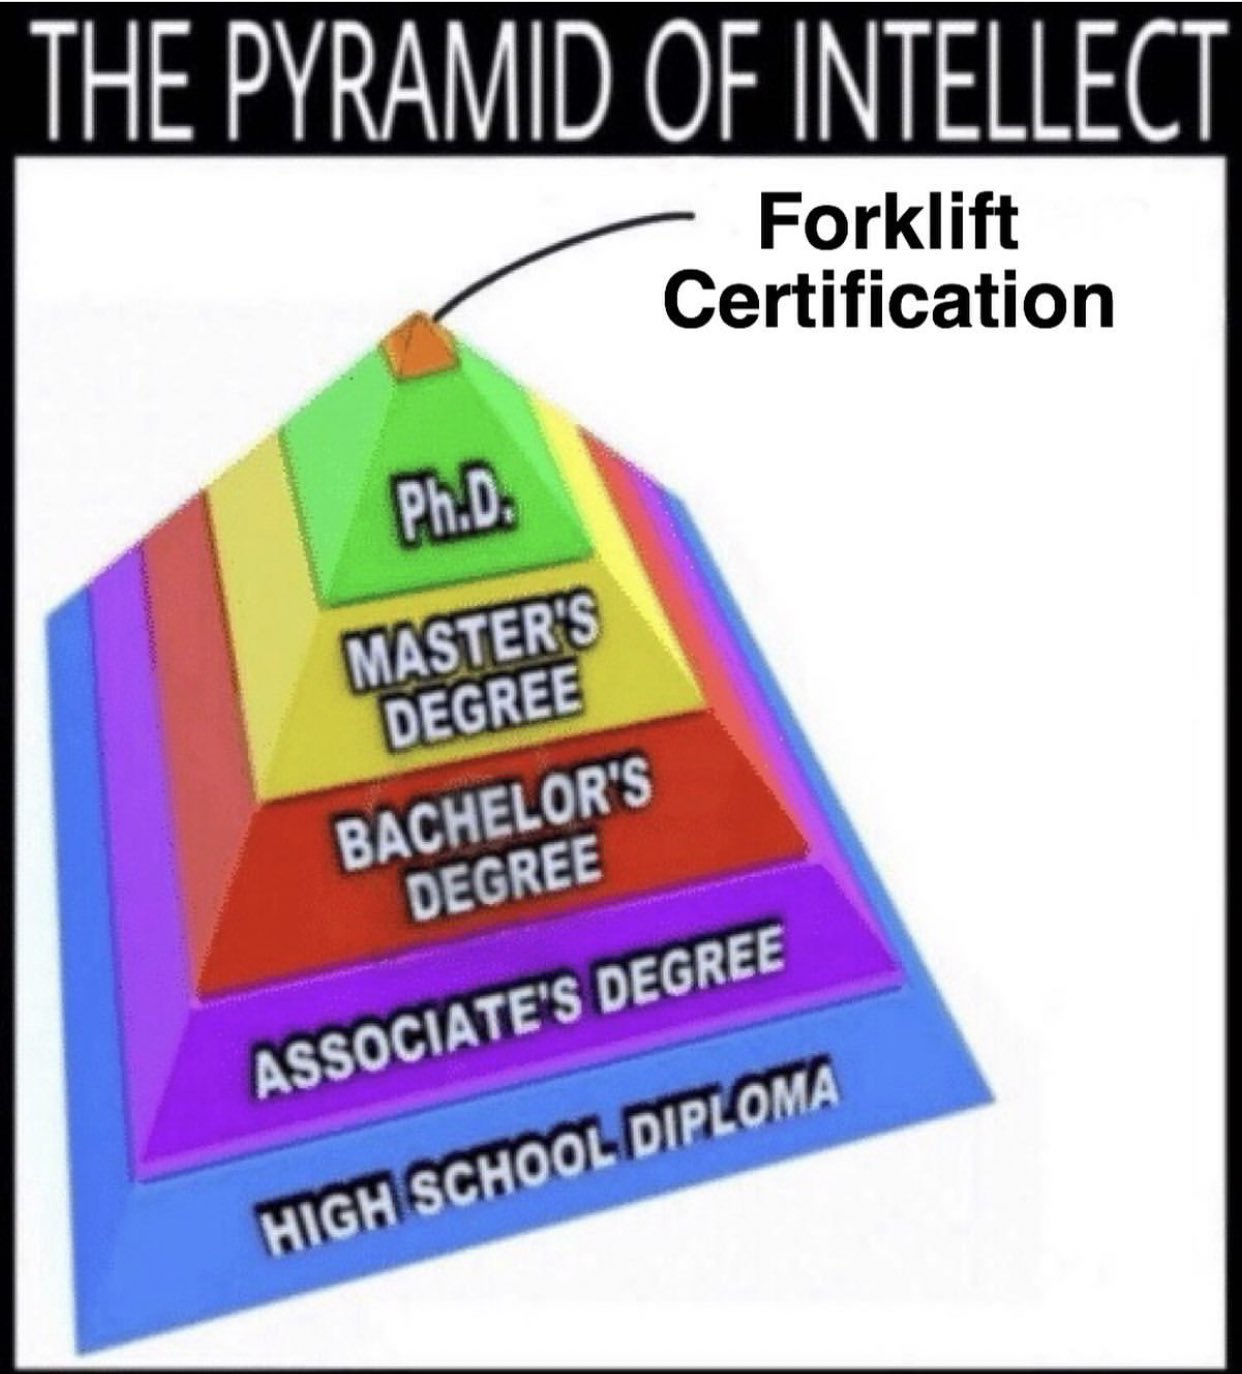 pyramid of intellect - The Pyramid Of Intellect Forklift Certification PhD. Master'S Degree Bachelor'S Degree Associate'S Degree High School Diploma